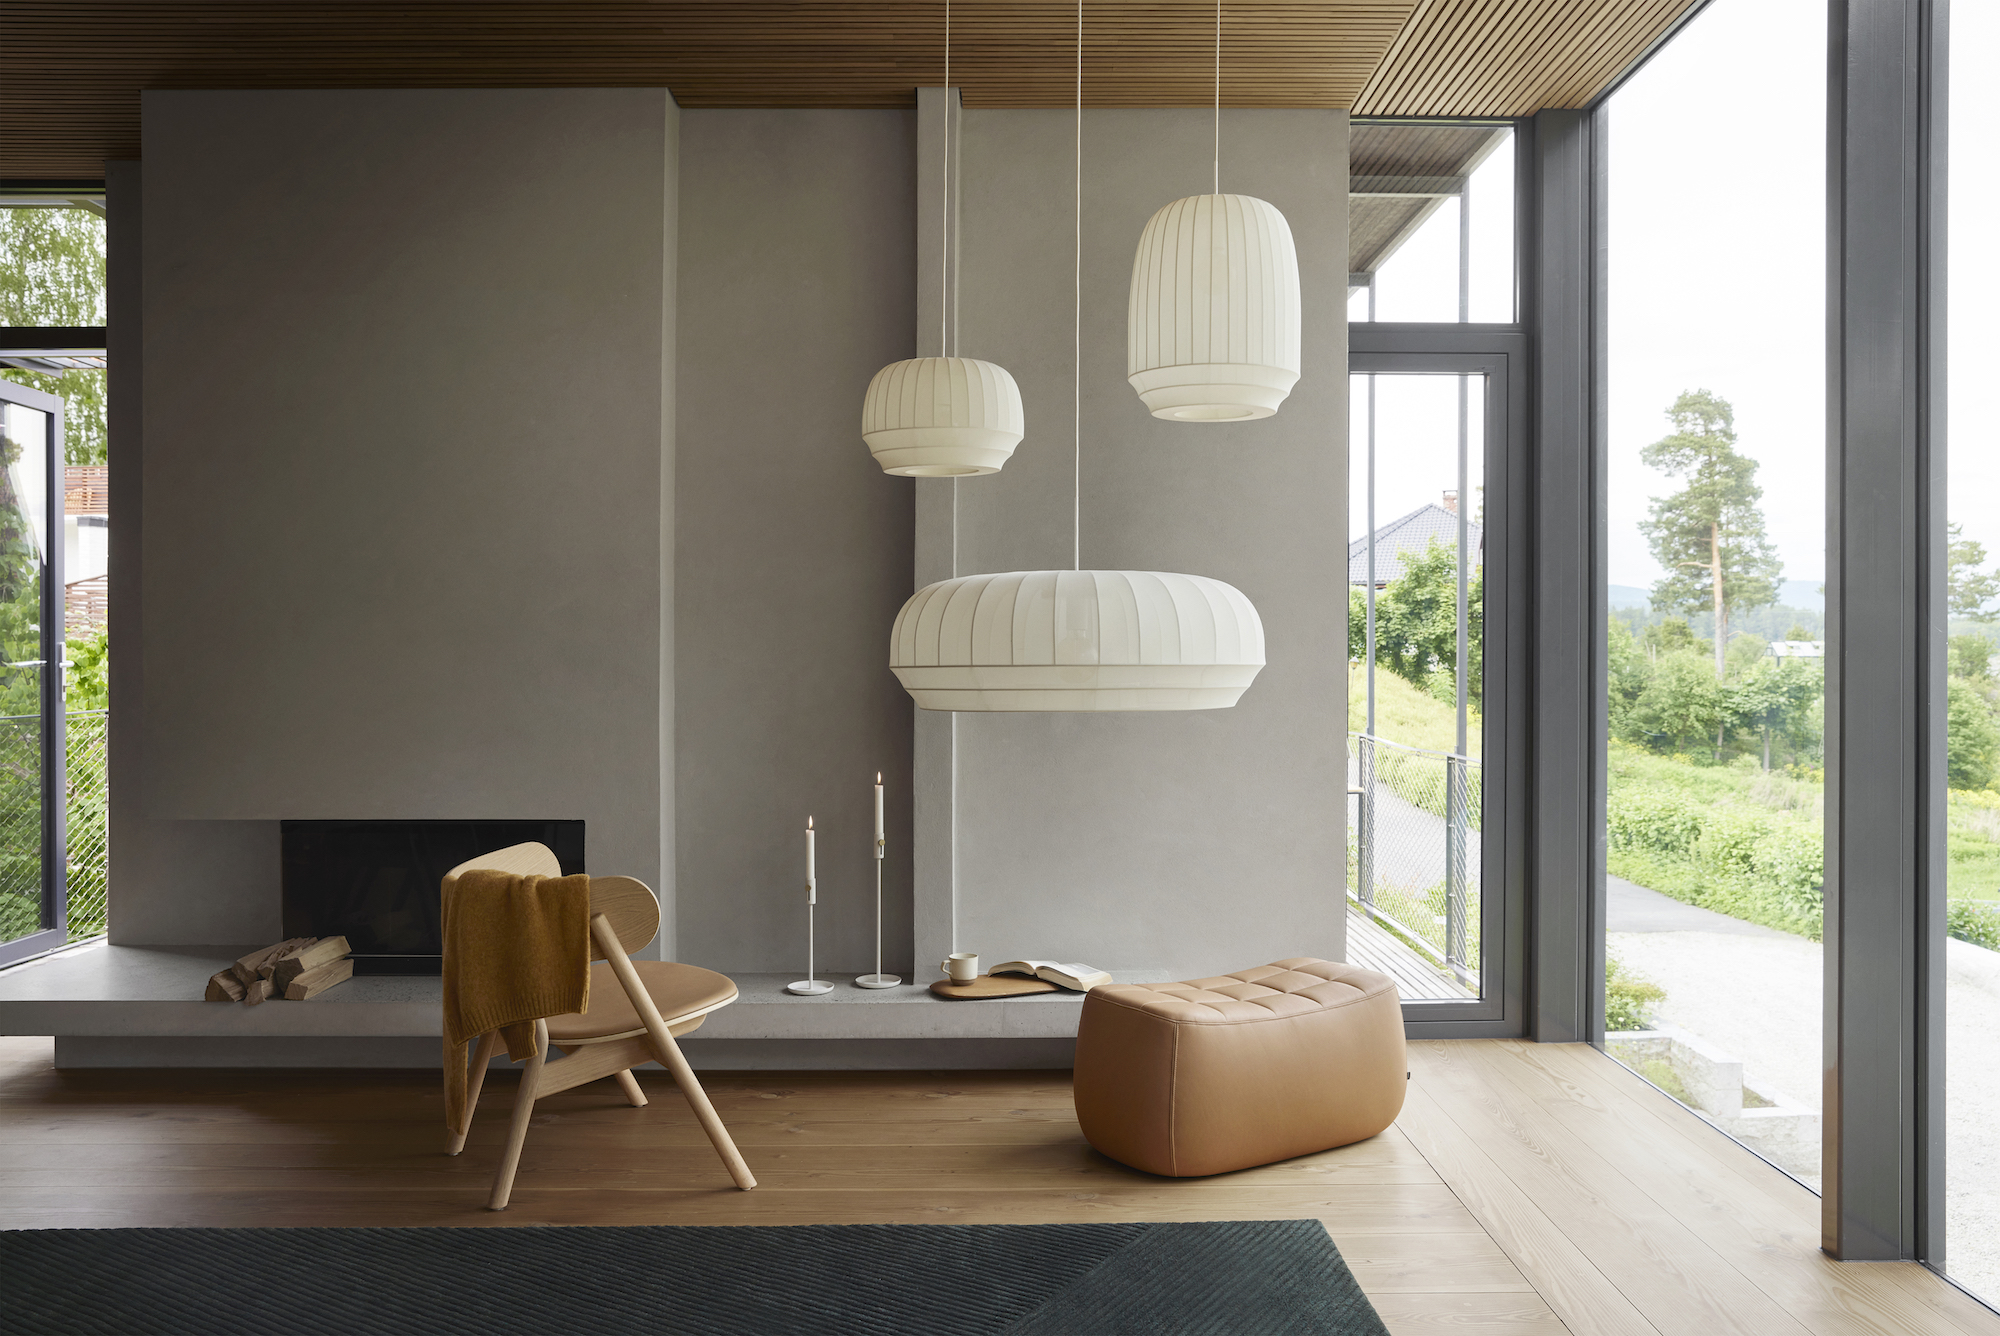 northern light pendant lamp design interior living furniture